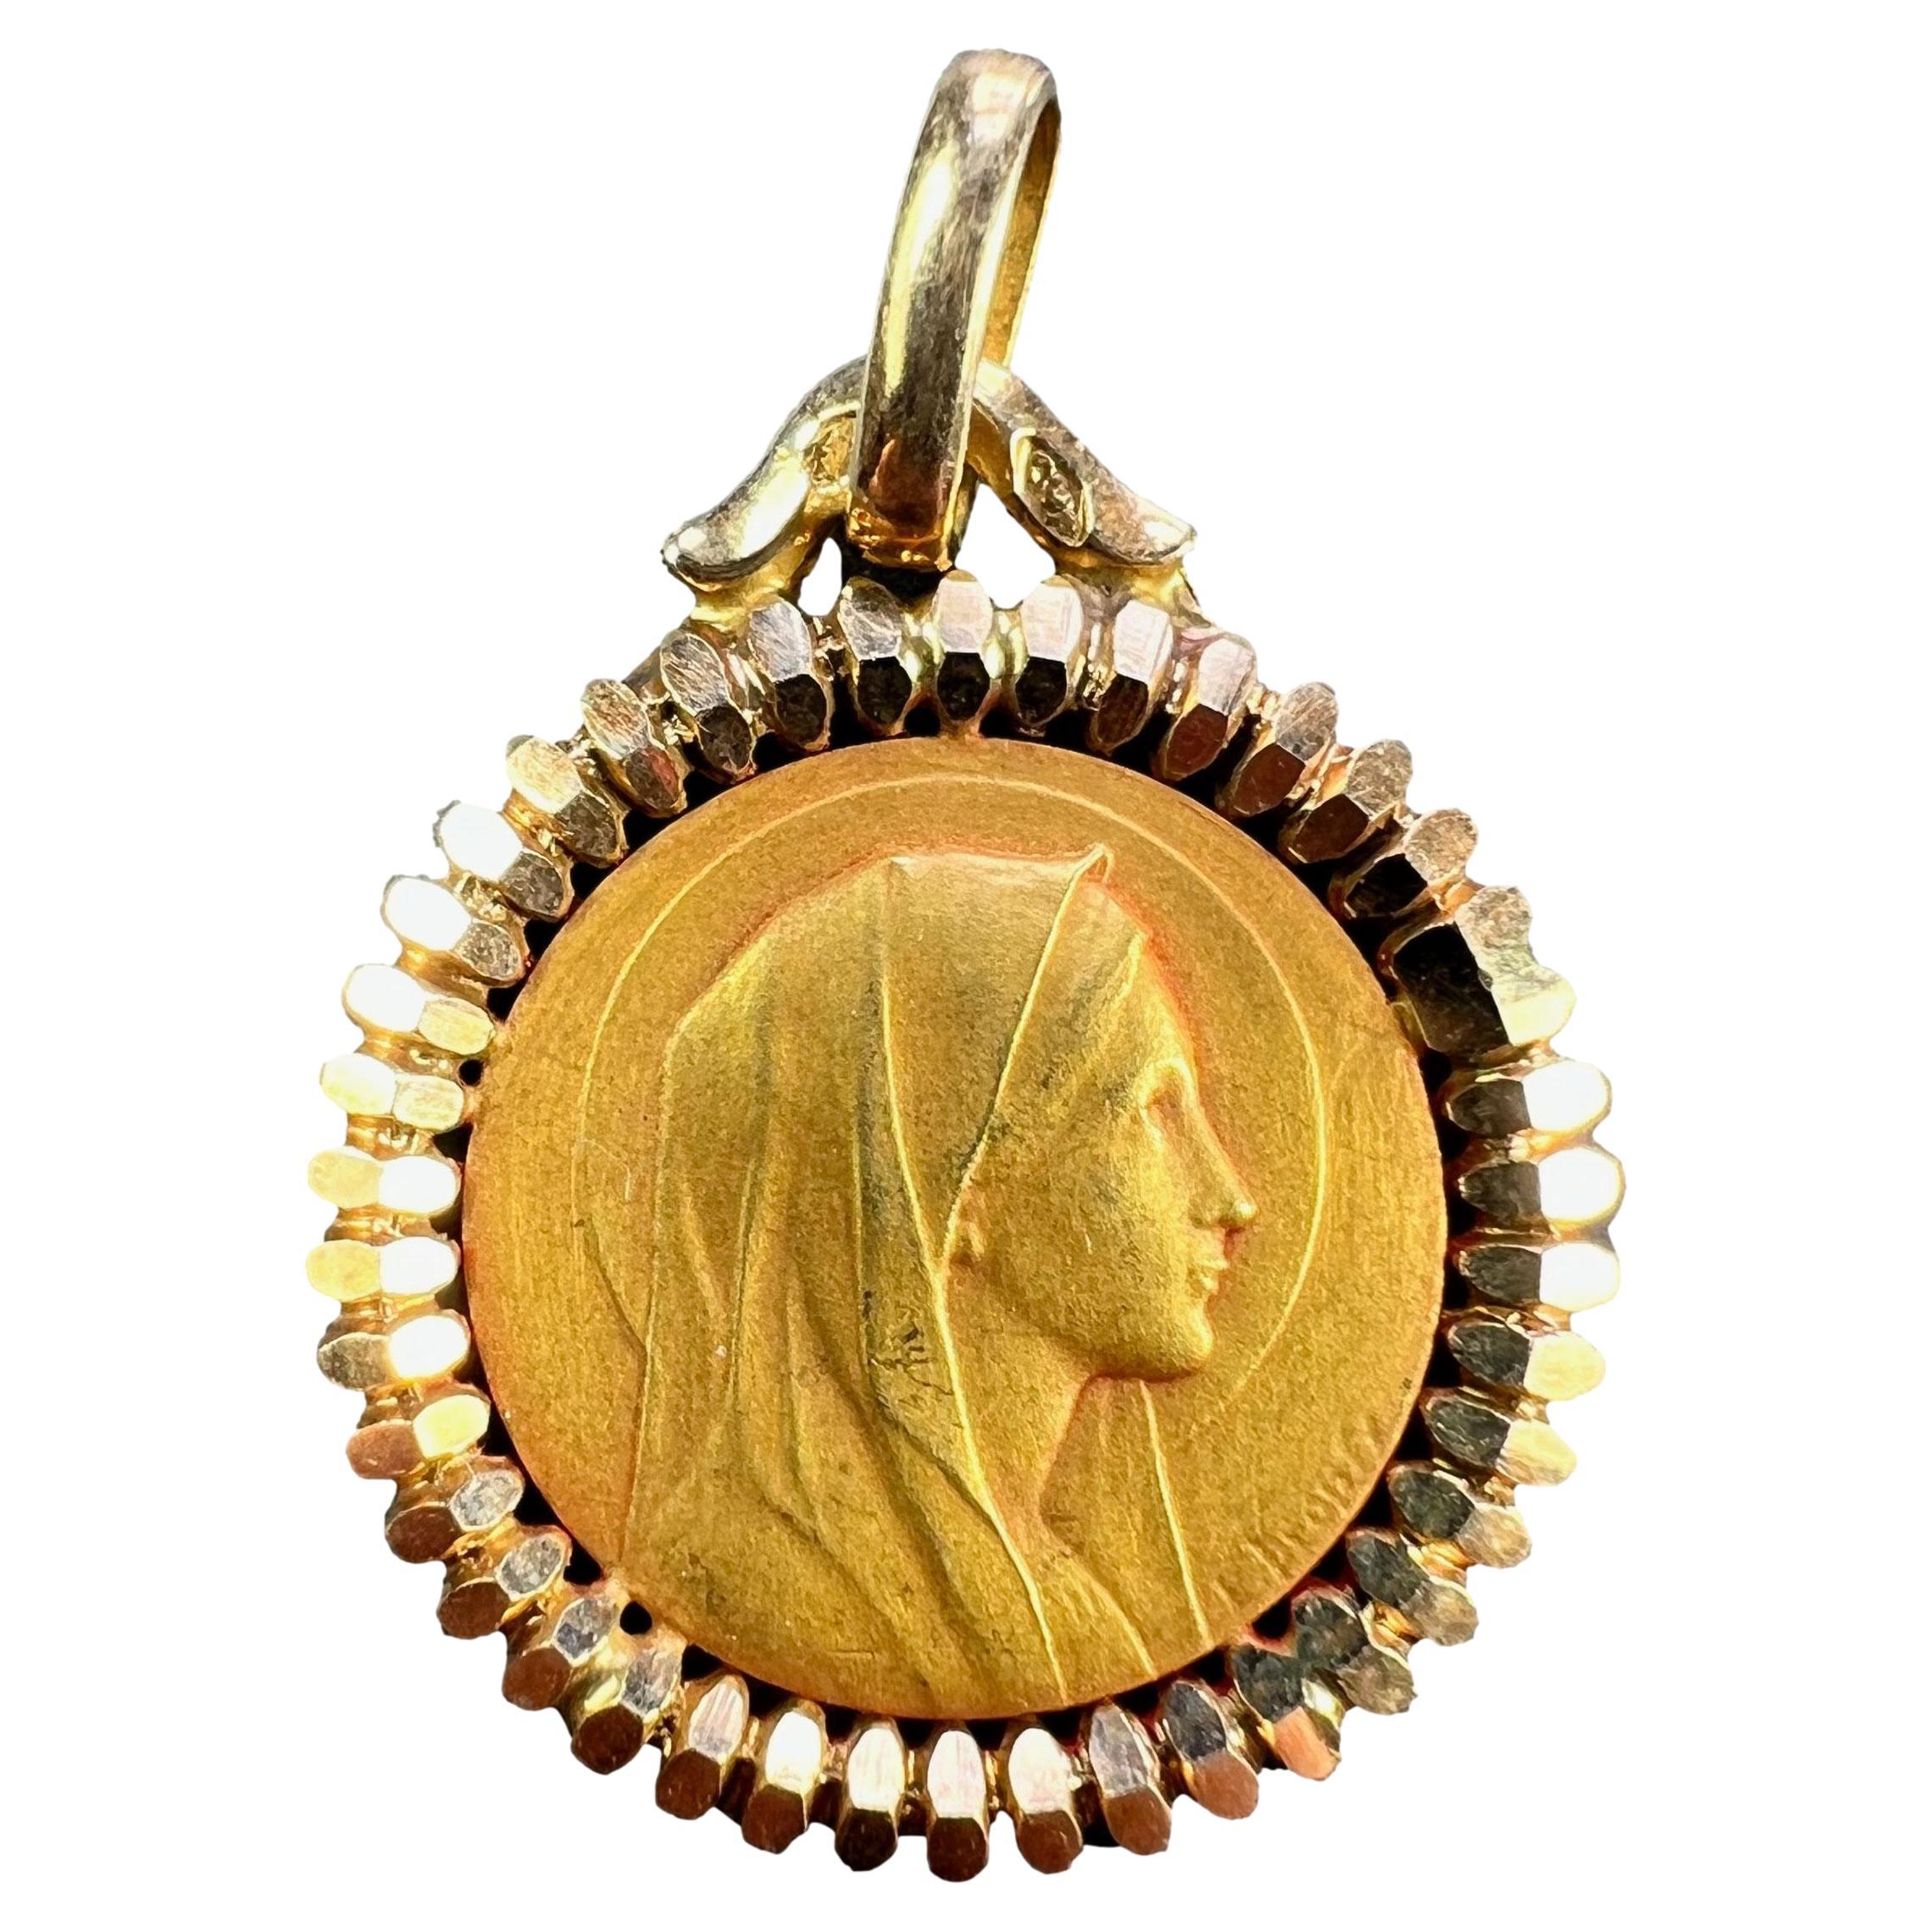 Pendentif français Dropsy Perriat Virgin Mary en or jaune 18 carats avec médaille religieuse en vente